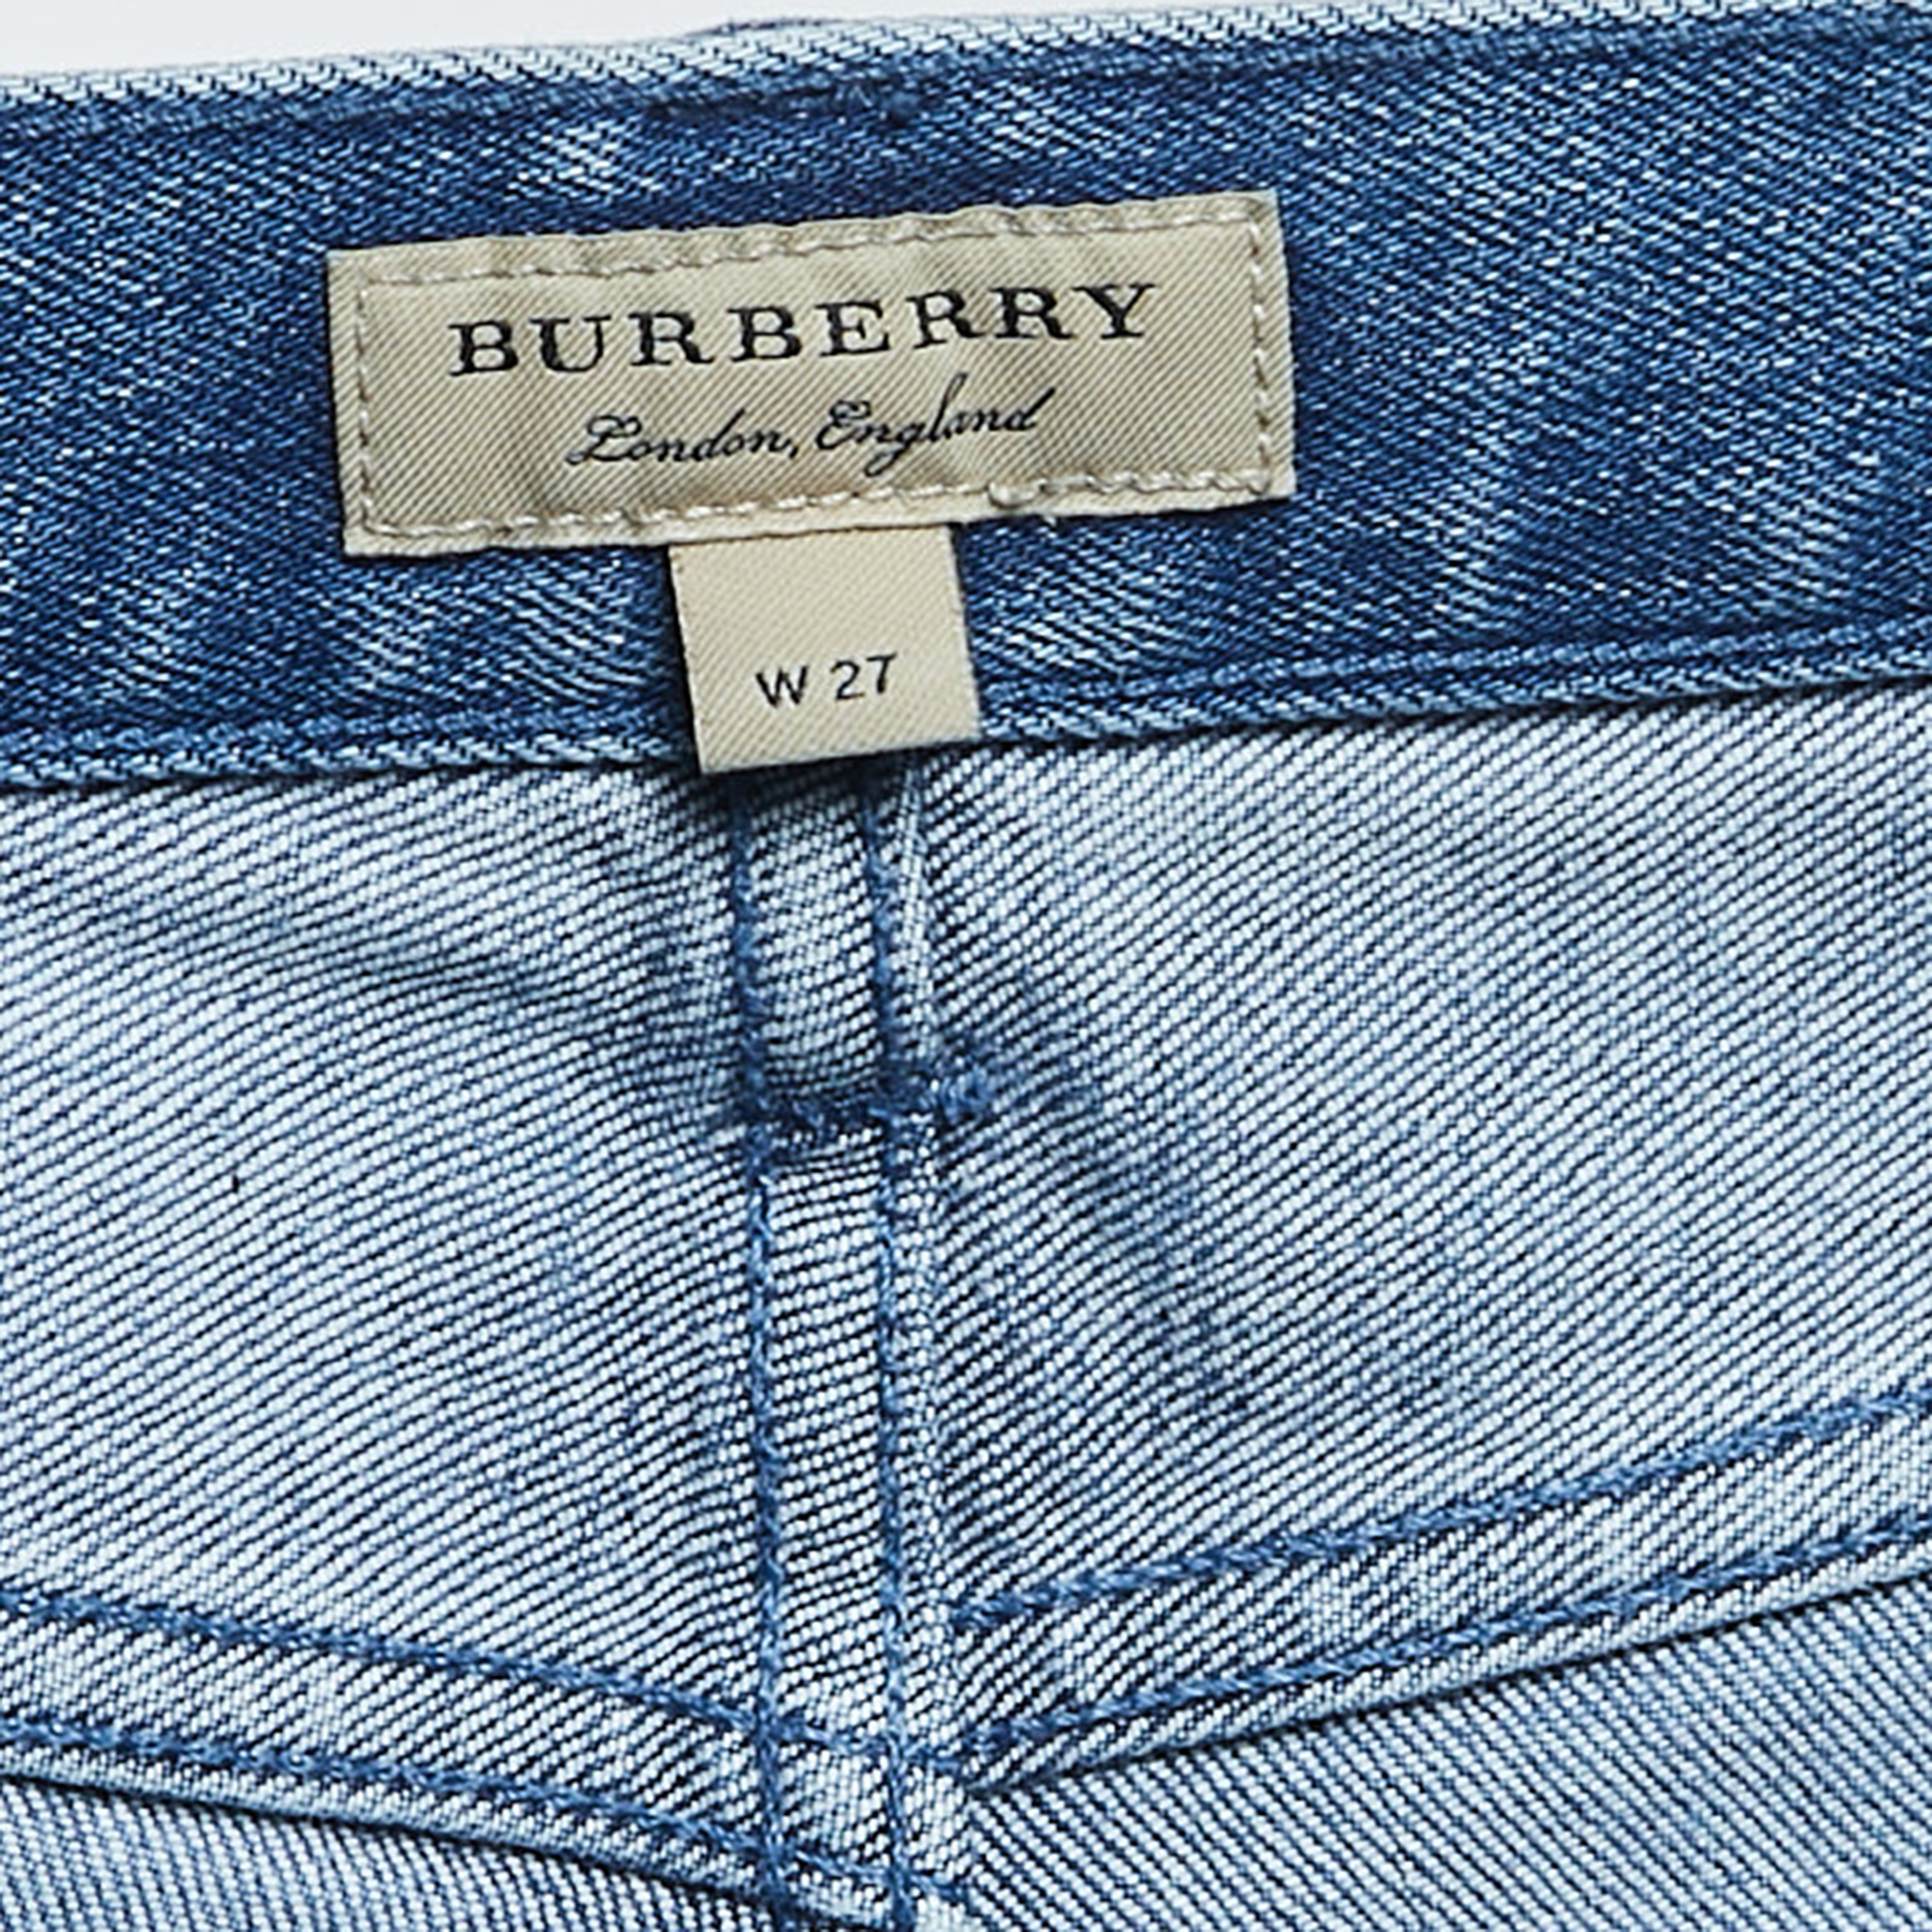 Burberry Blue Washed Denim Slim Crop Jeans S Waist 27